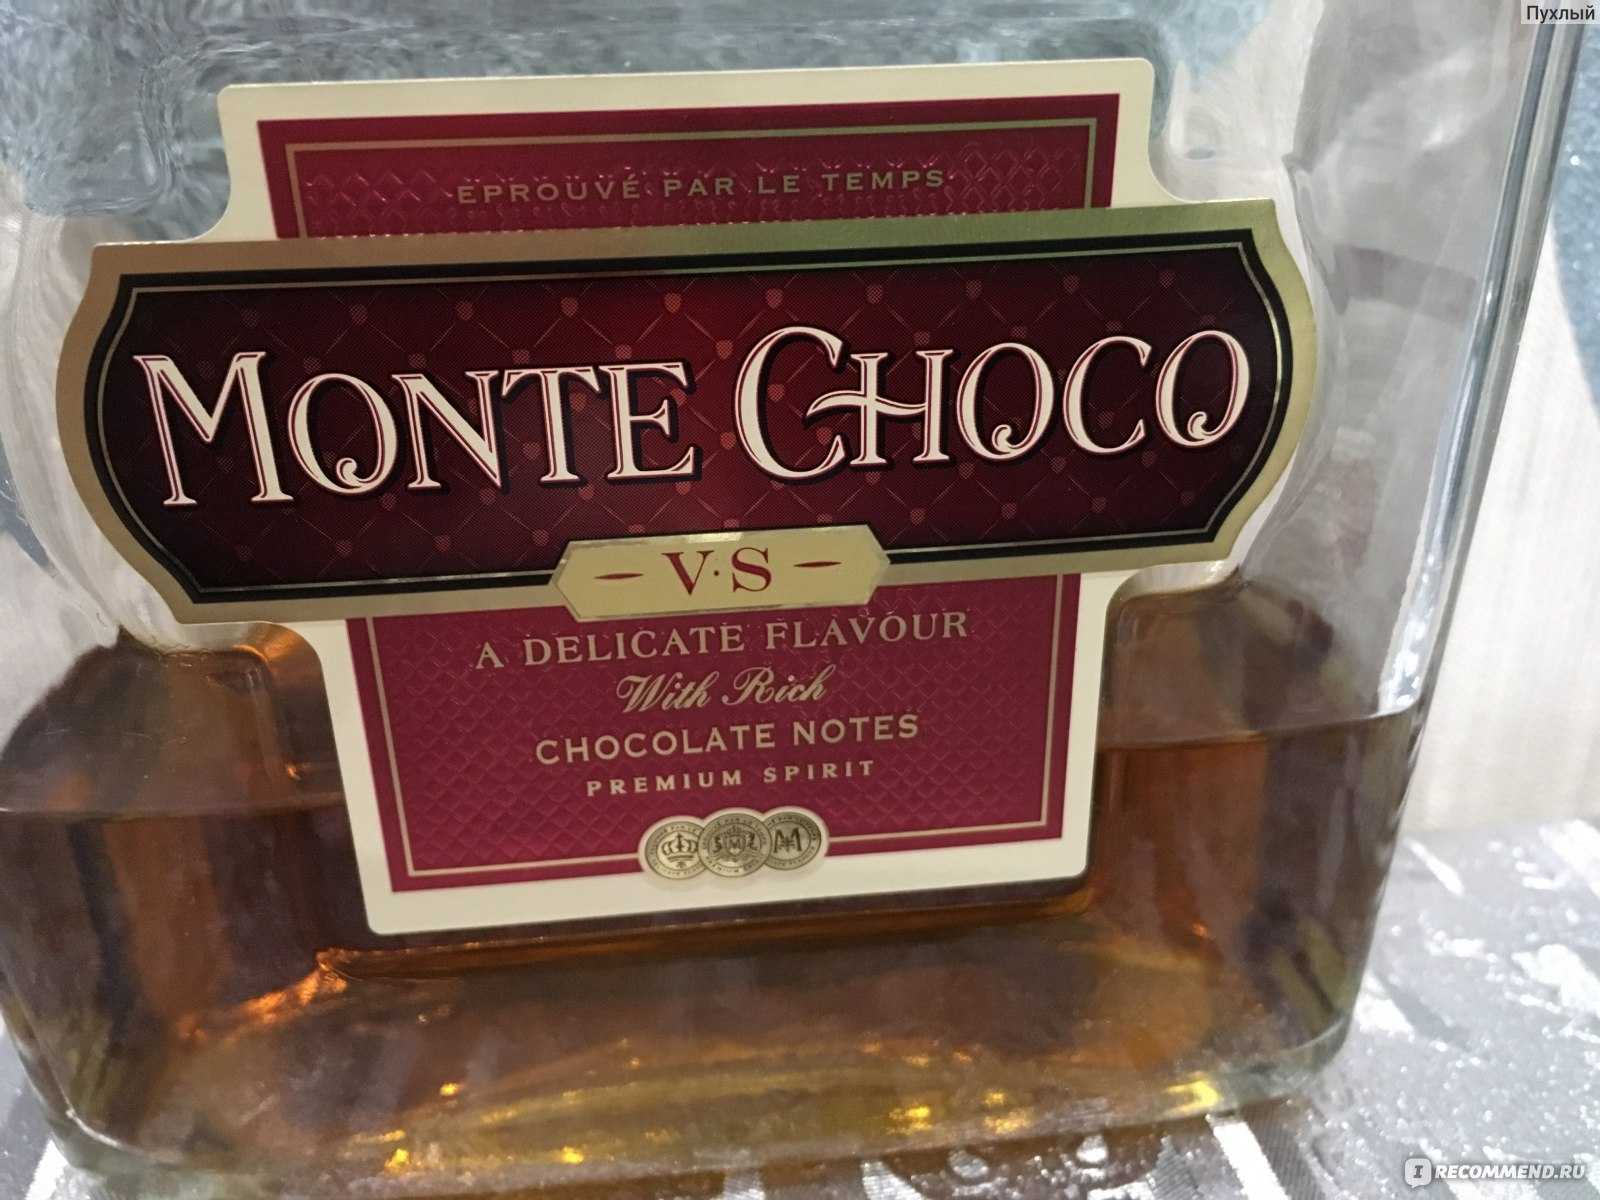 Коньяк монте шоко. Шоколадный коньяк Монте шоко. Монте Чоко коньяк шоколадный. Монте Чоко коньяк шоколадная гора. Напиток коньяк Monte Choco.